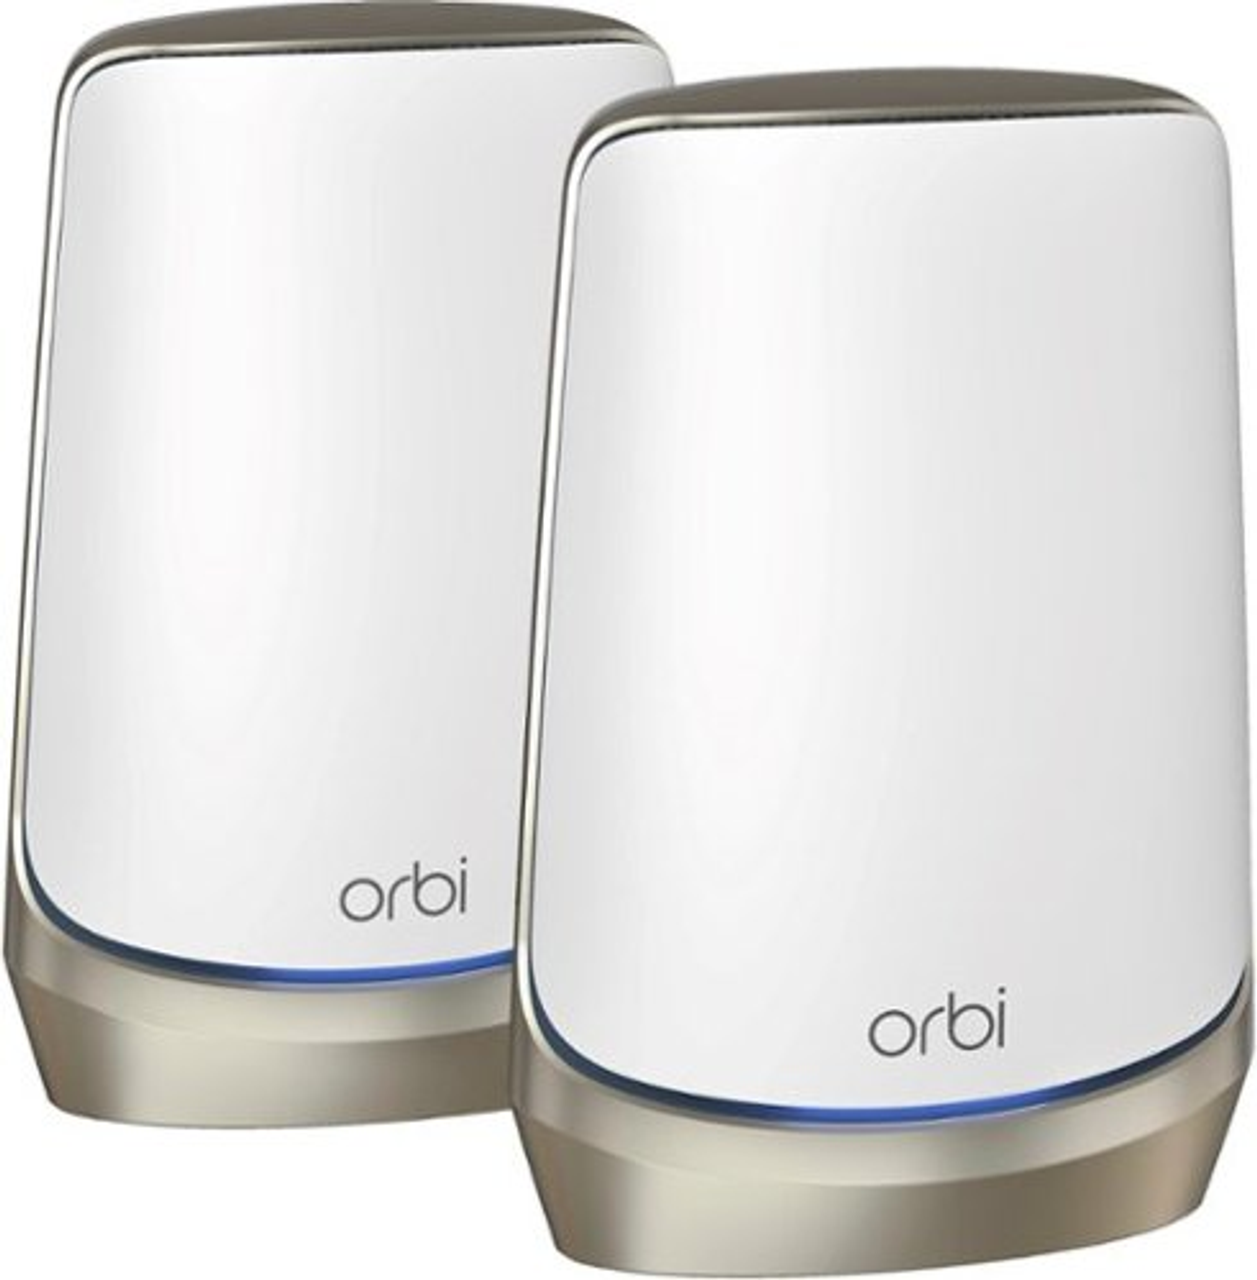 NETGEAR - Orbi 960 Series AXE11000 Quad-Band Mesh Wi-Fi System (2-pack) - White